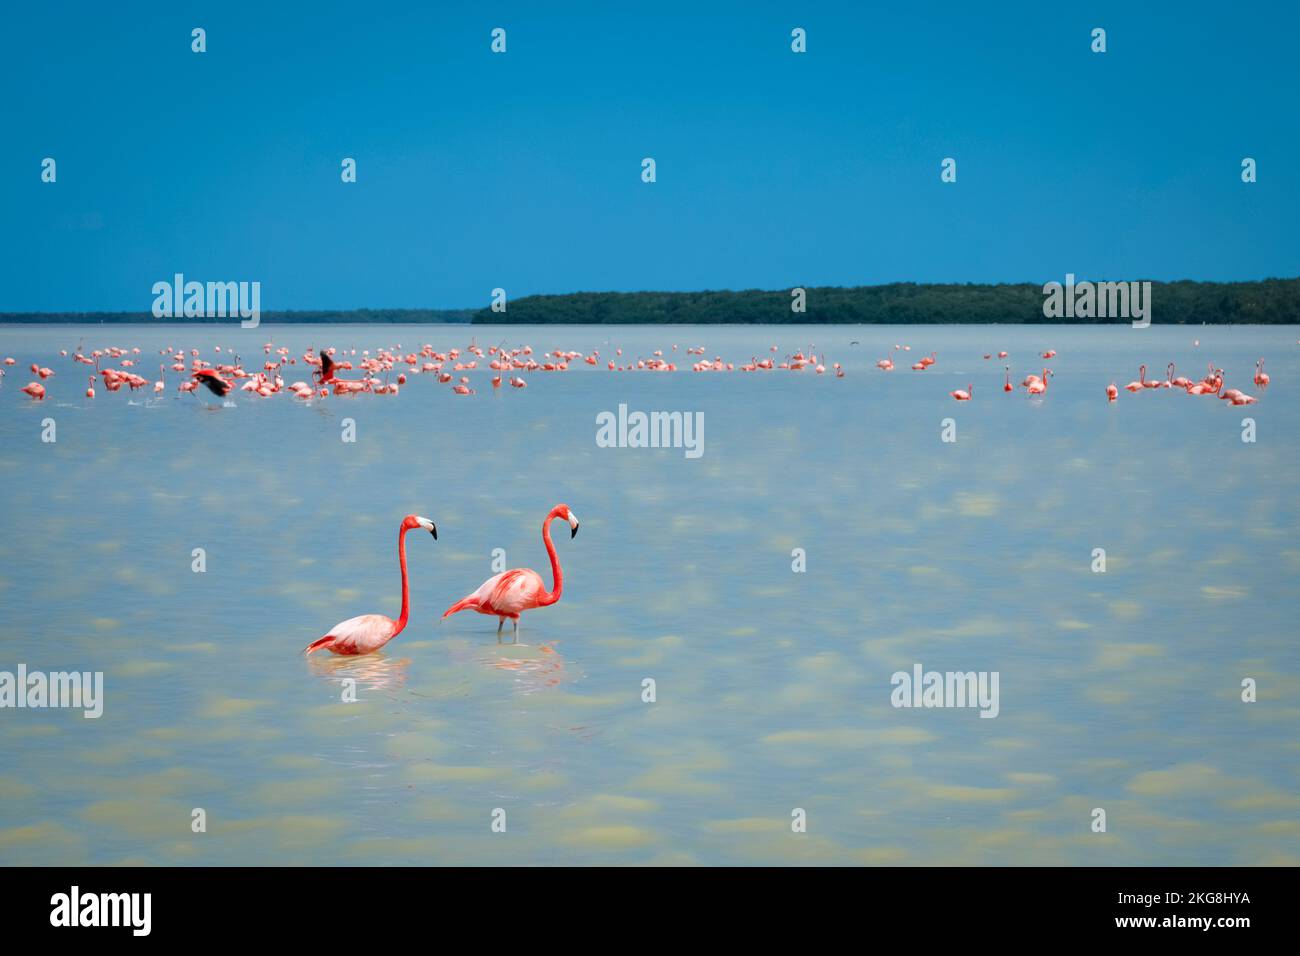 Mexico, Celestun, Pink flamingos wading in water at Reserva de la Biosfera Ria Celestun Stock Photo